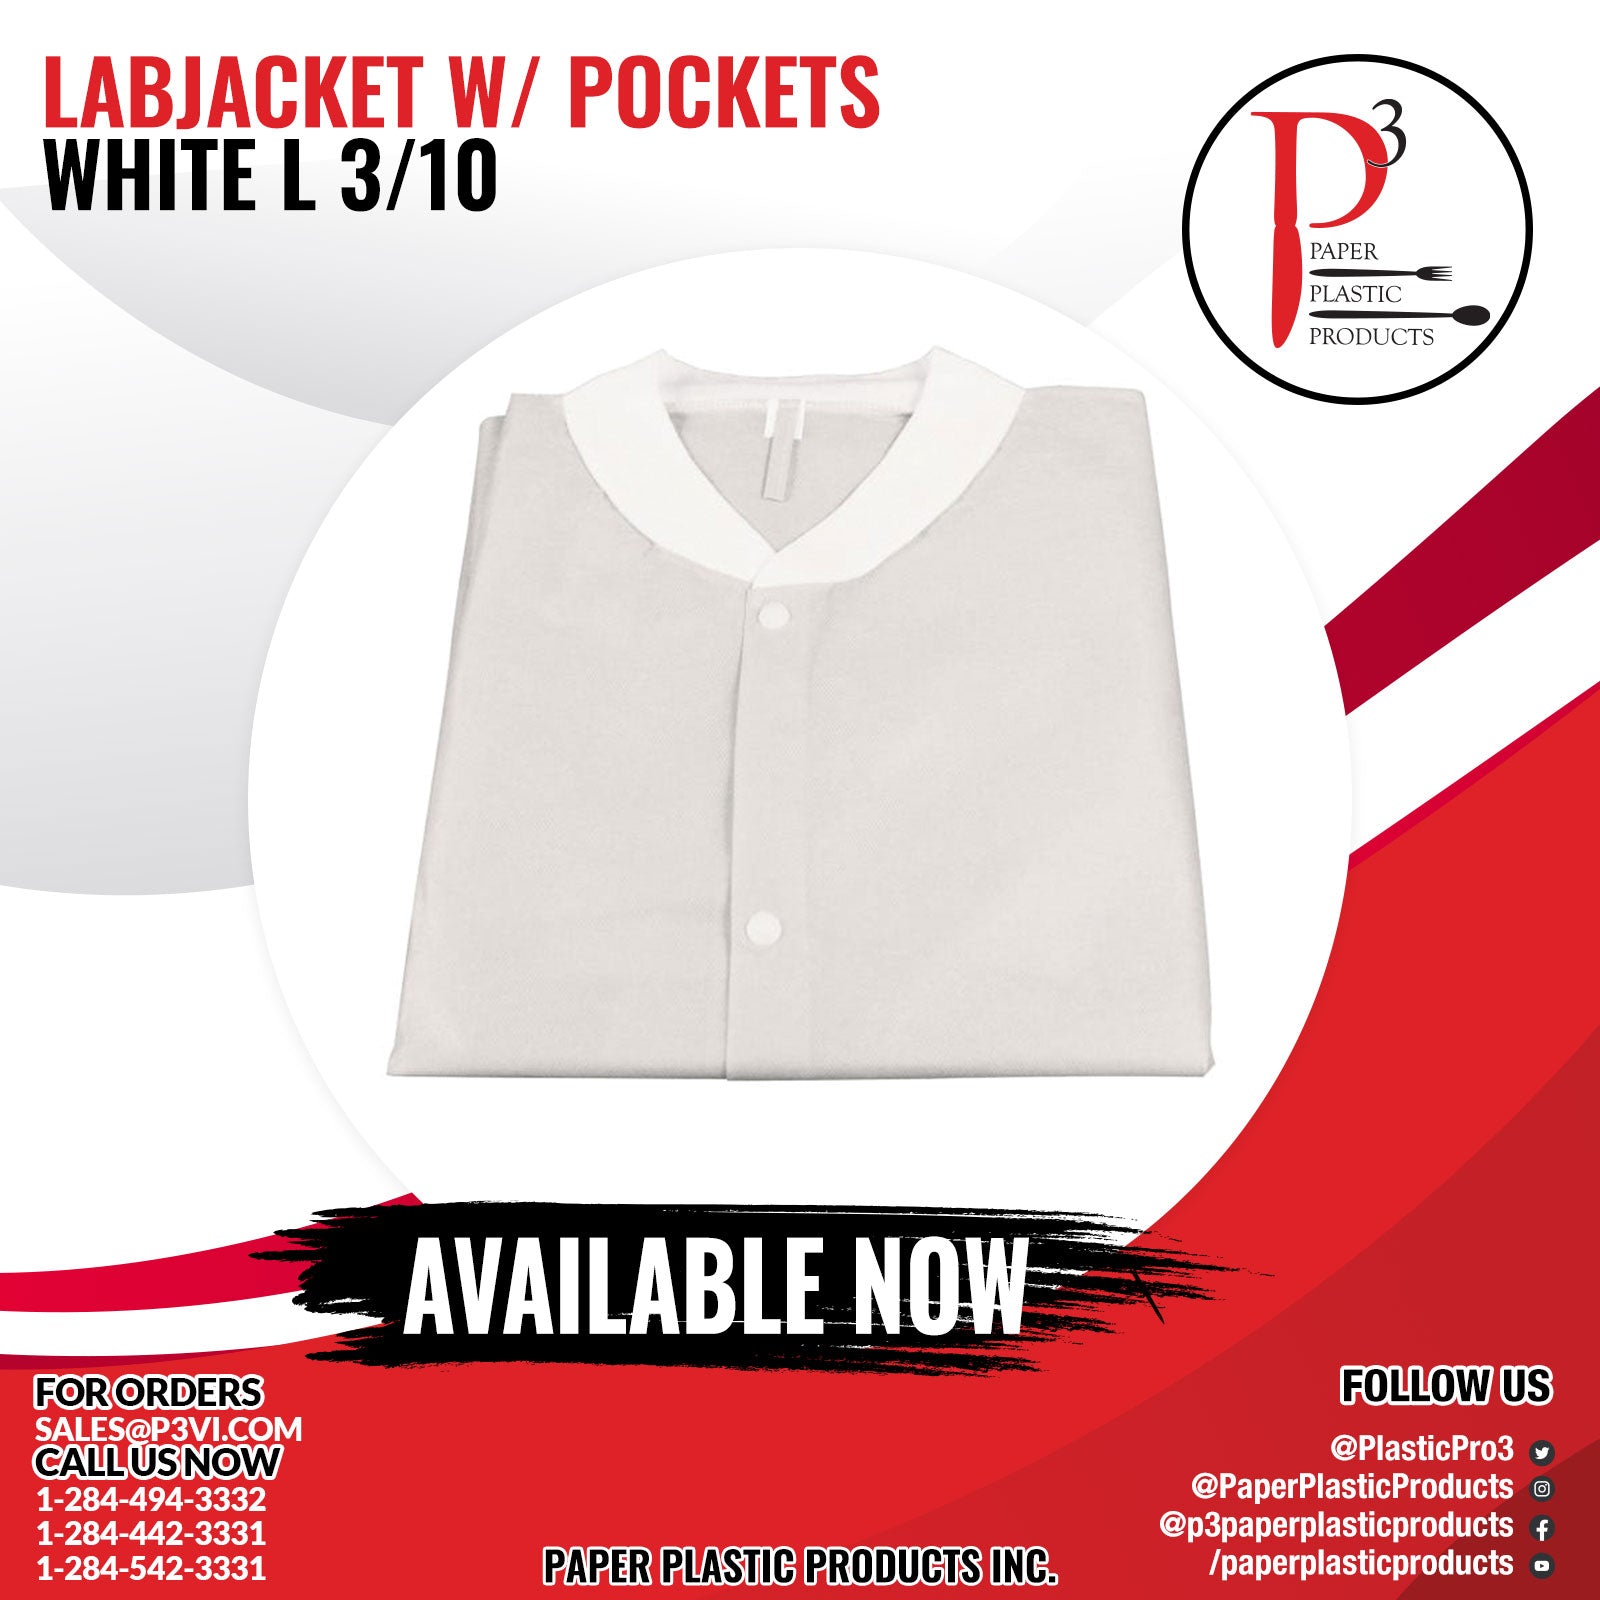 Labjacket w/ Pockets White L 3/10